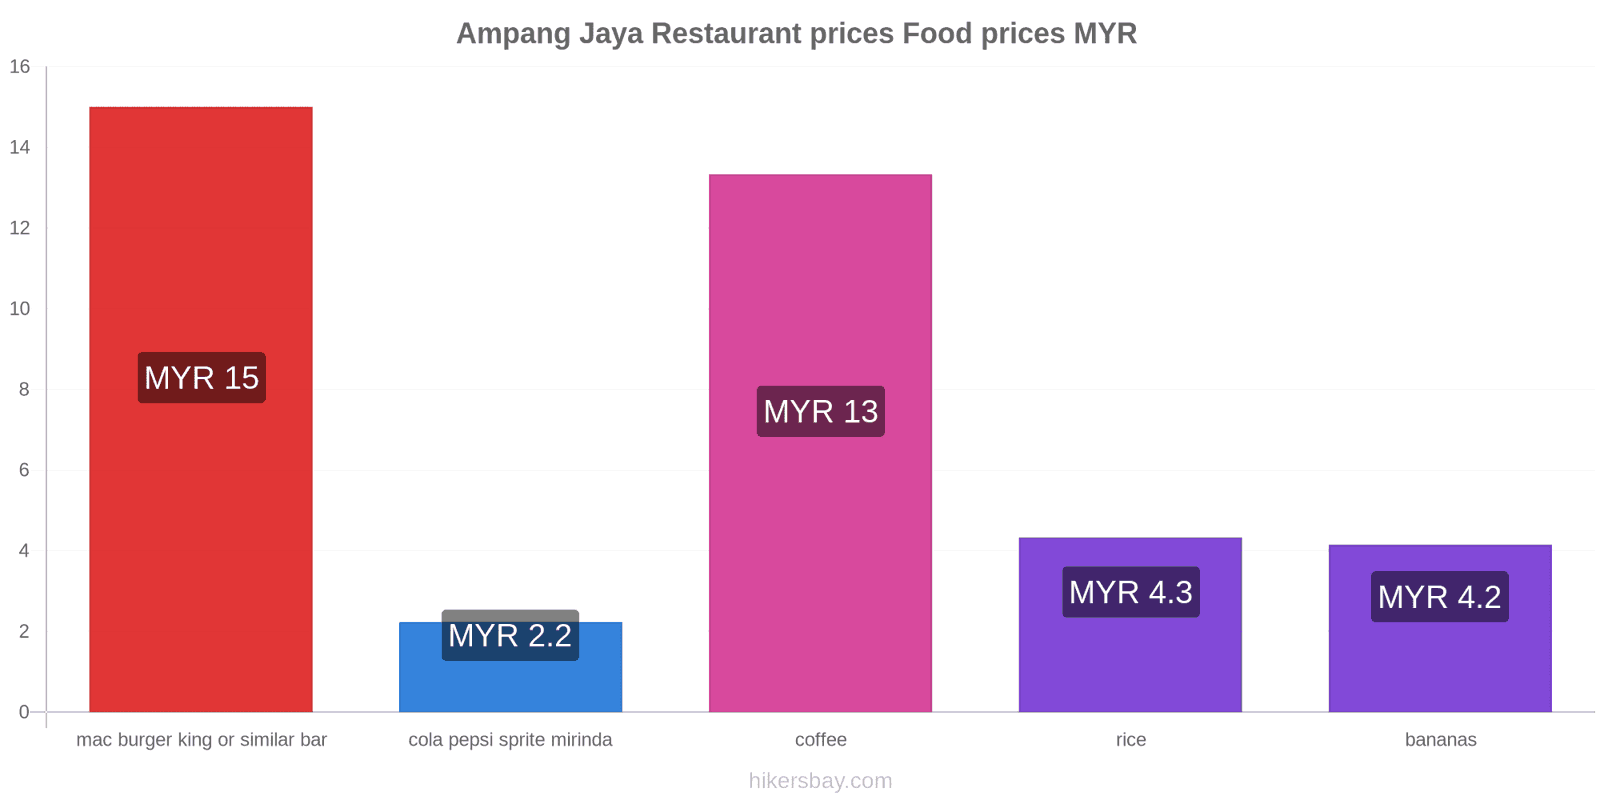 Ampang Jaya price changes hikersbay.com